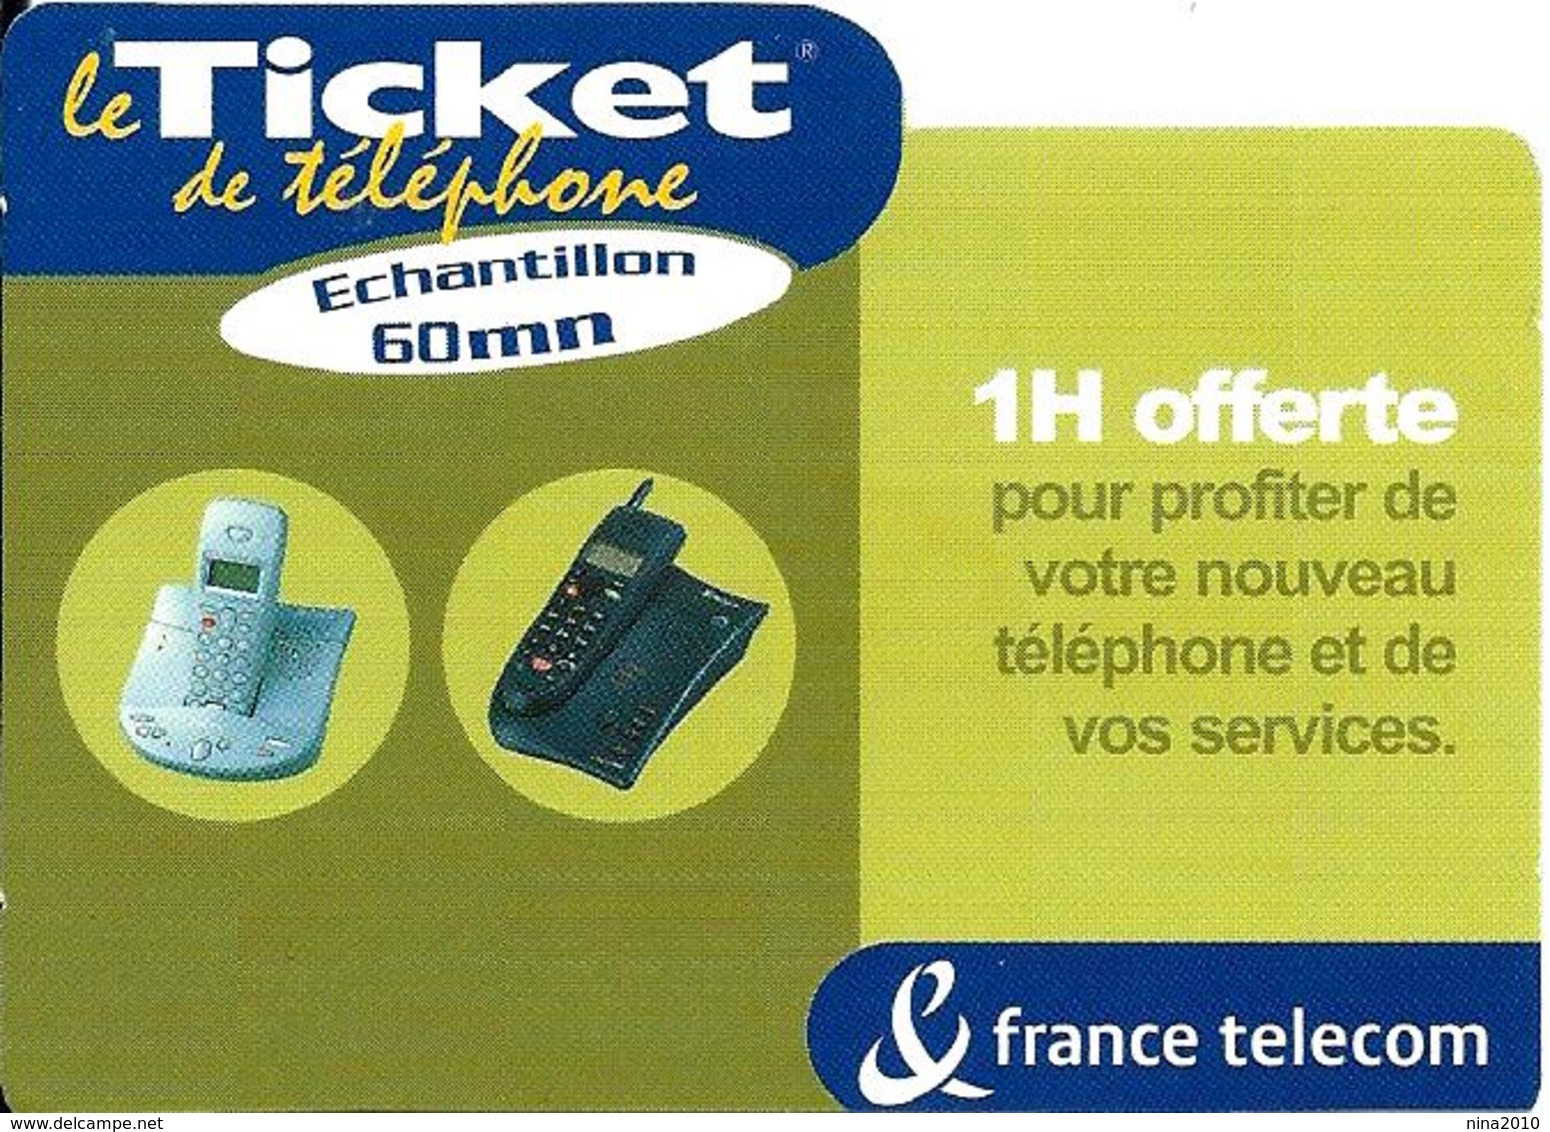 Ticket De Téléphone Privé - 1 H Offerte - 60 000 Ex. (luxe) - 15/11/2002 - FT